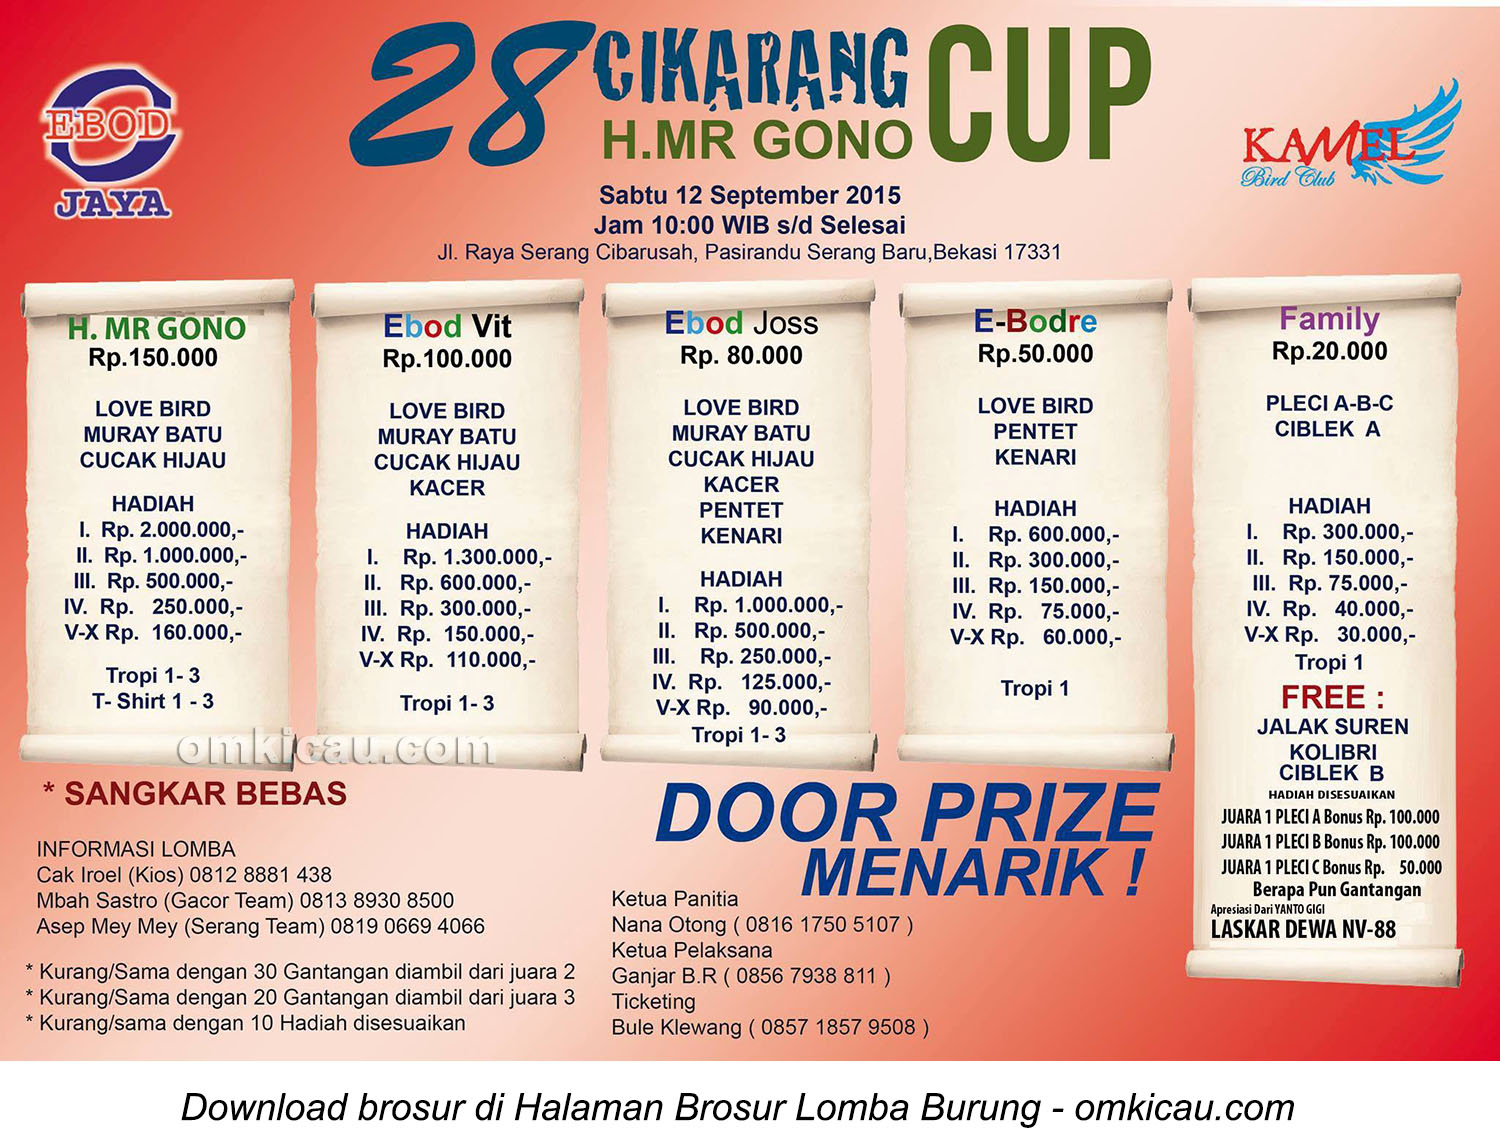 Brosur Lomba Burung Berkicau 28 Cikarang Cup, Bekasi, 12 September 2015